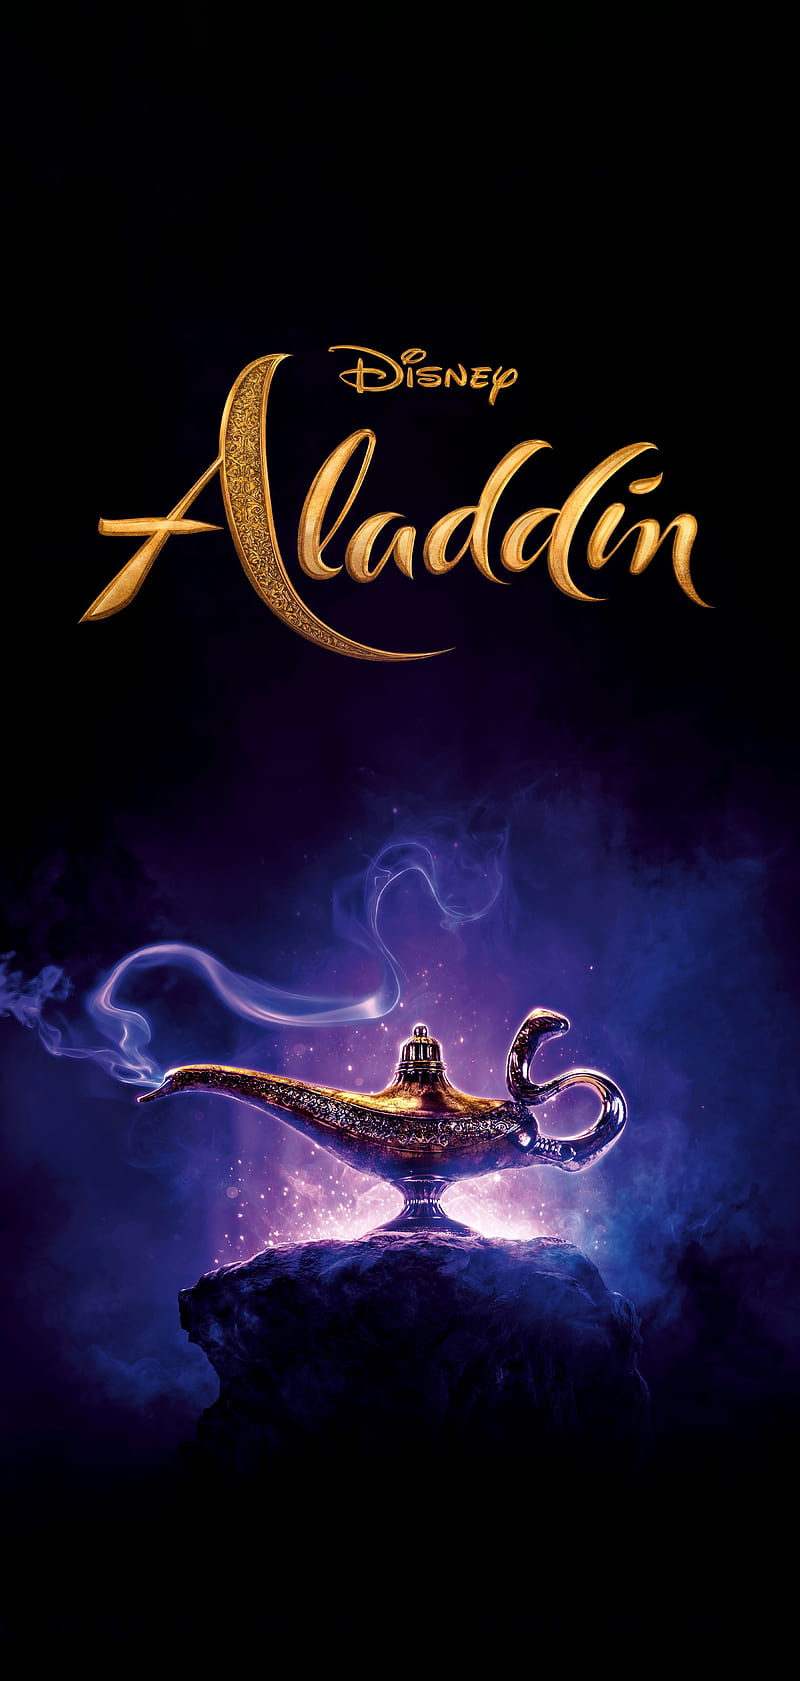 Aladdin and Jasmine - Disney Couples Wallpaper (6252985) - Fanpop